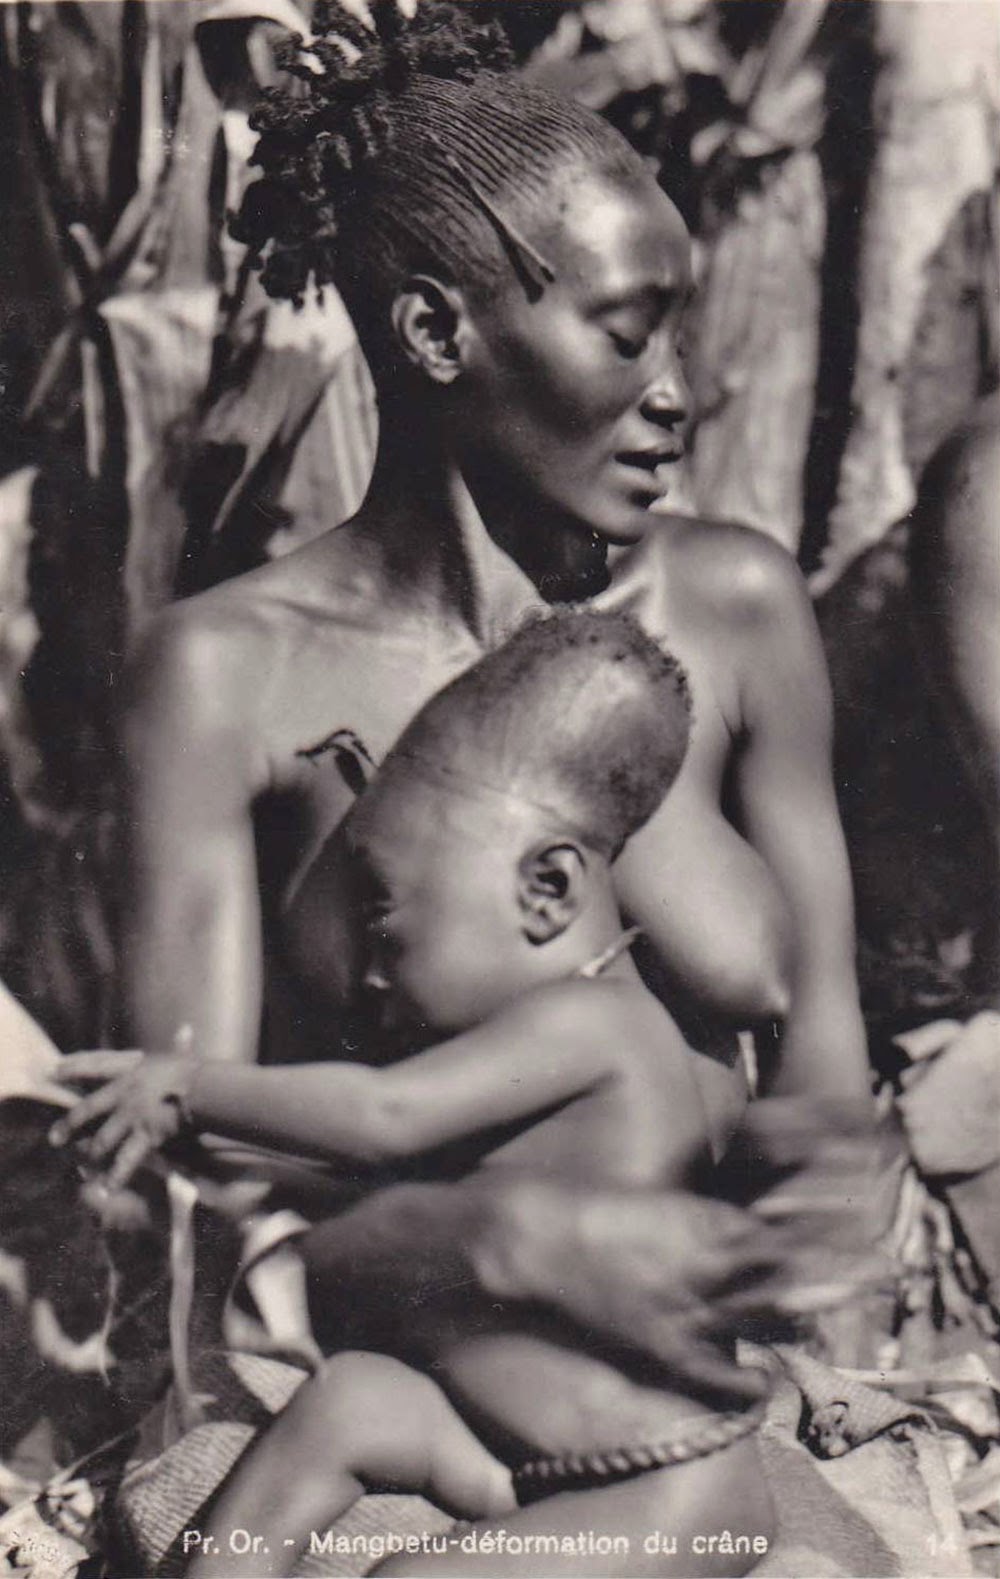 A Mangbetu woman and her child.